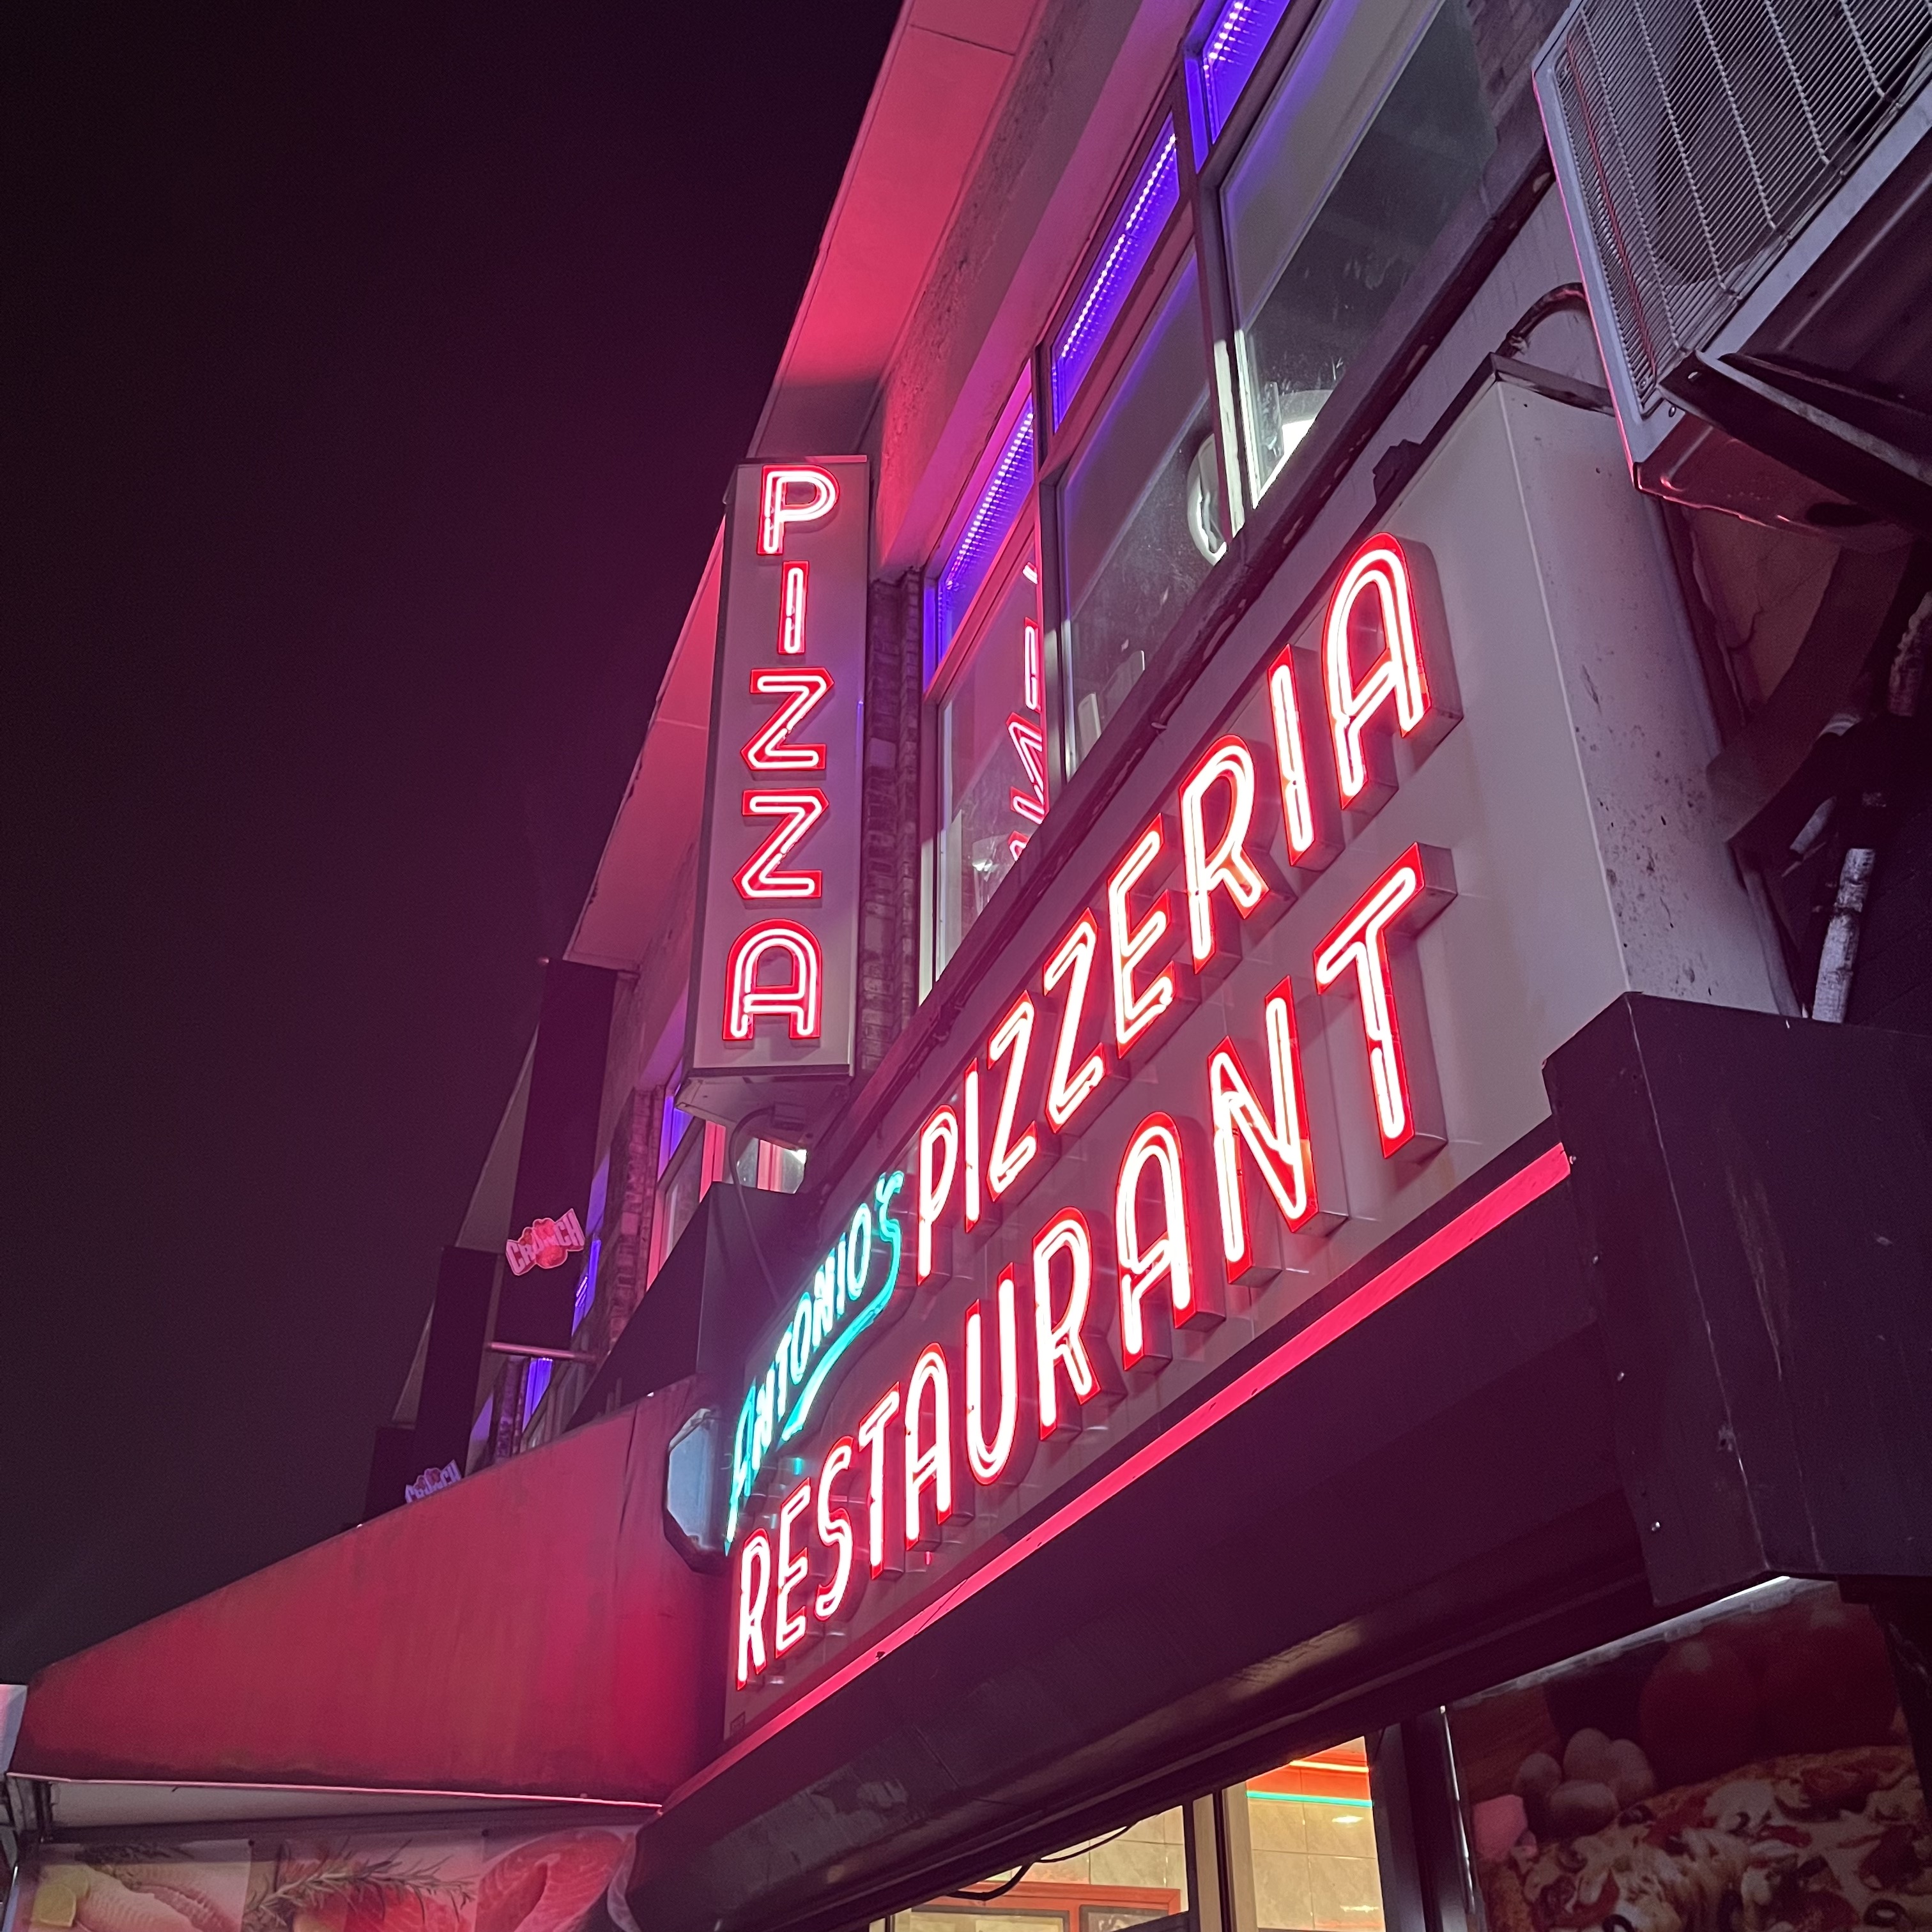 Antonio's Pizzeria neon sign on Flatbush Ave. Park Slope, Brooklyn.